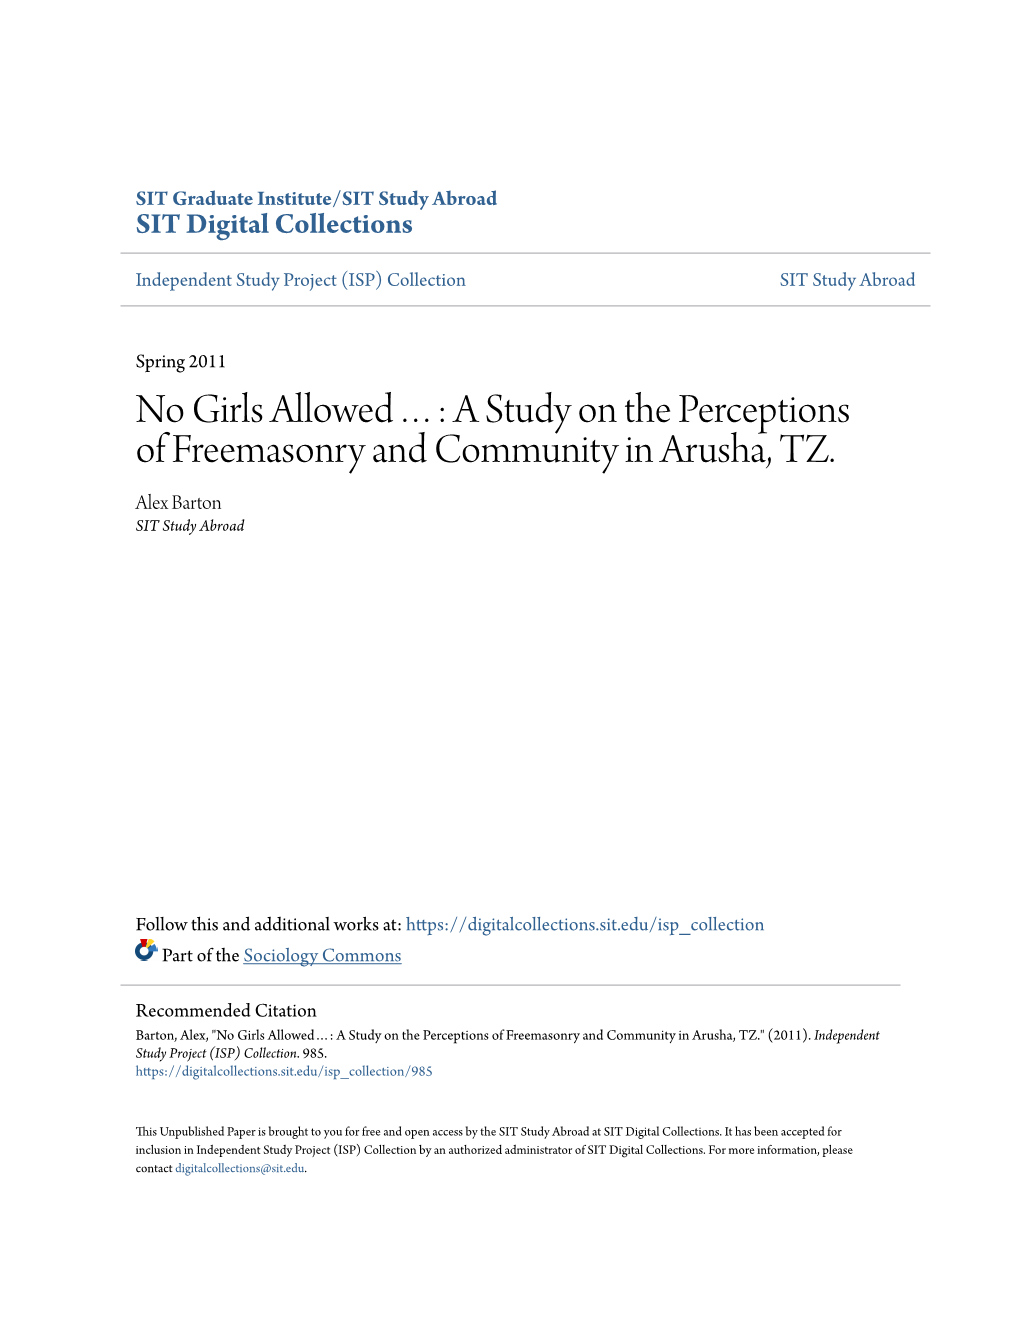 No Girls Allowedâ•¦: a Study on the Perceptions of Freemasonry And